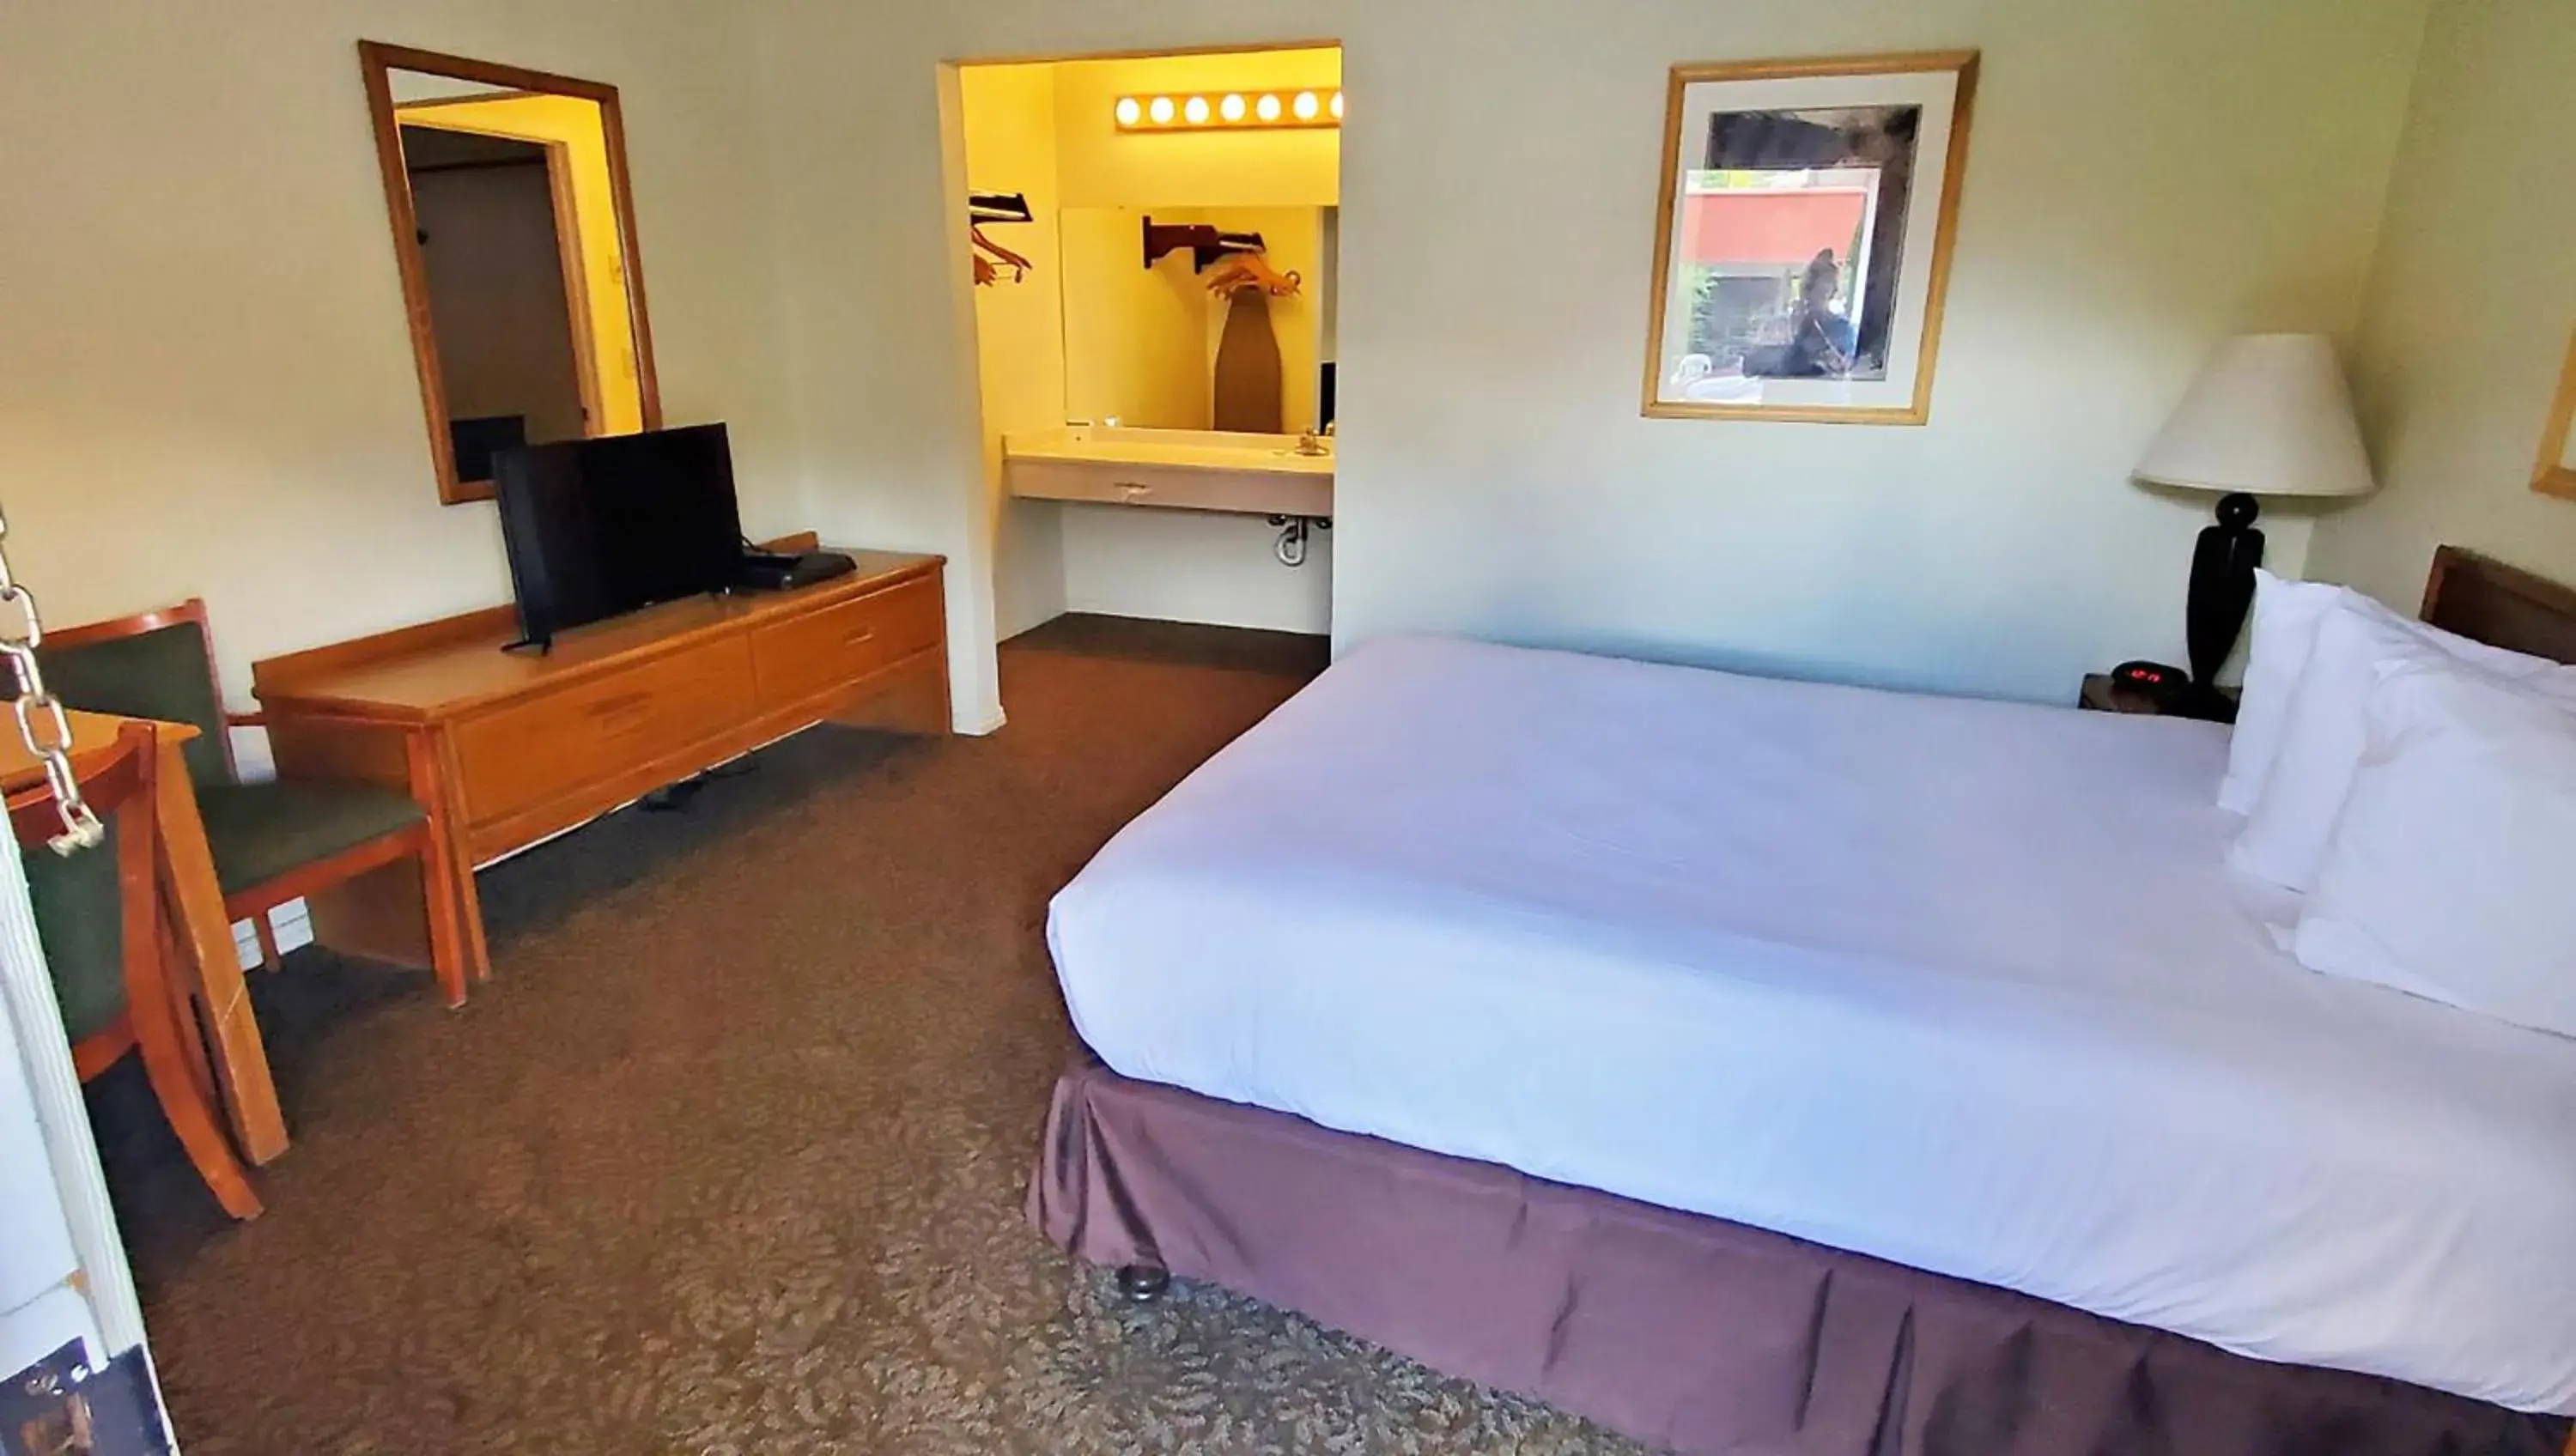 Bedroom, Bed in Magnuson Hotel Ely